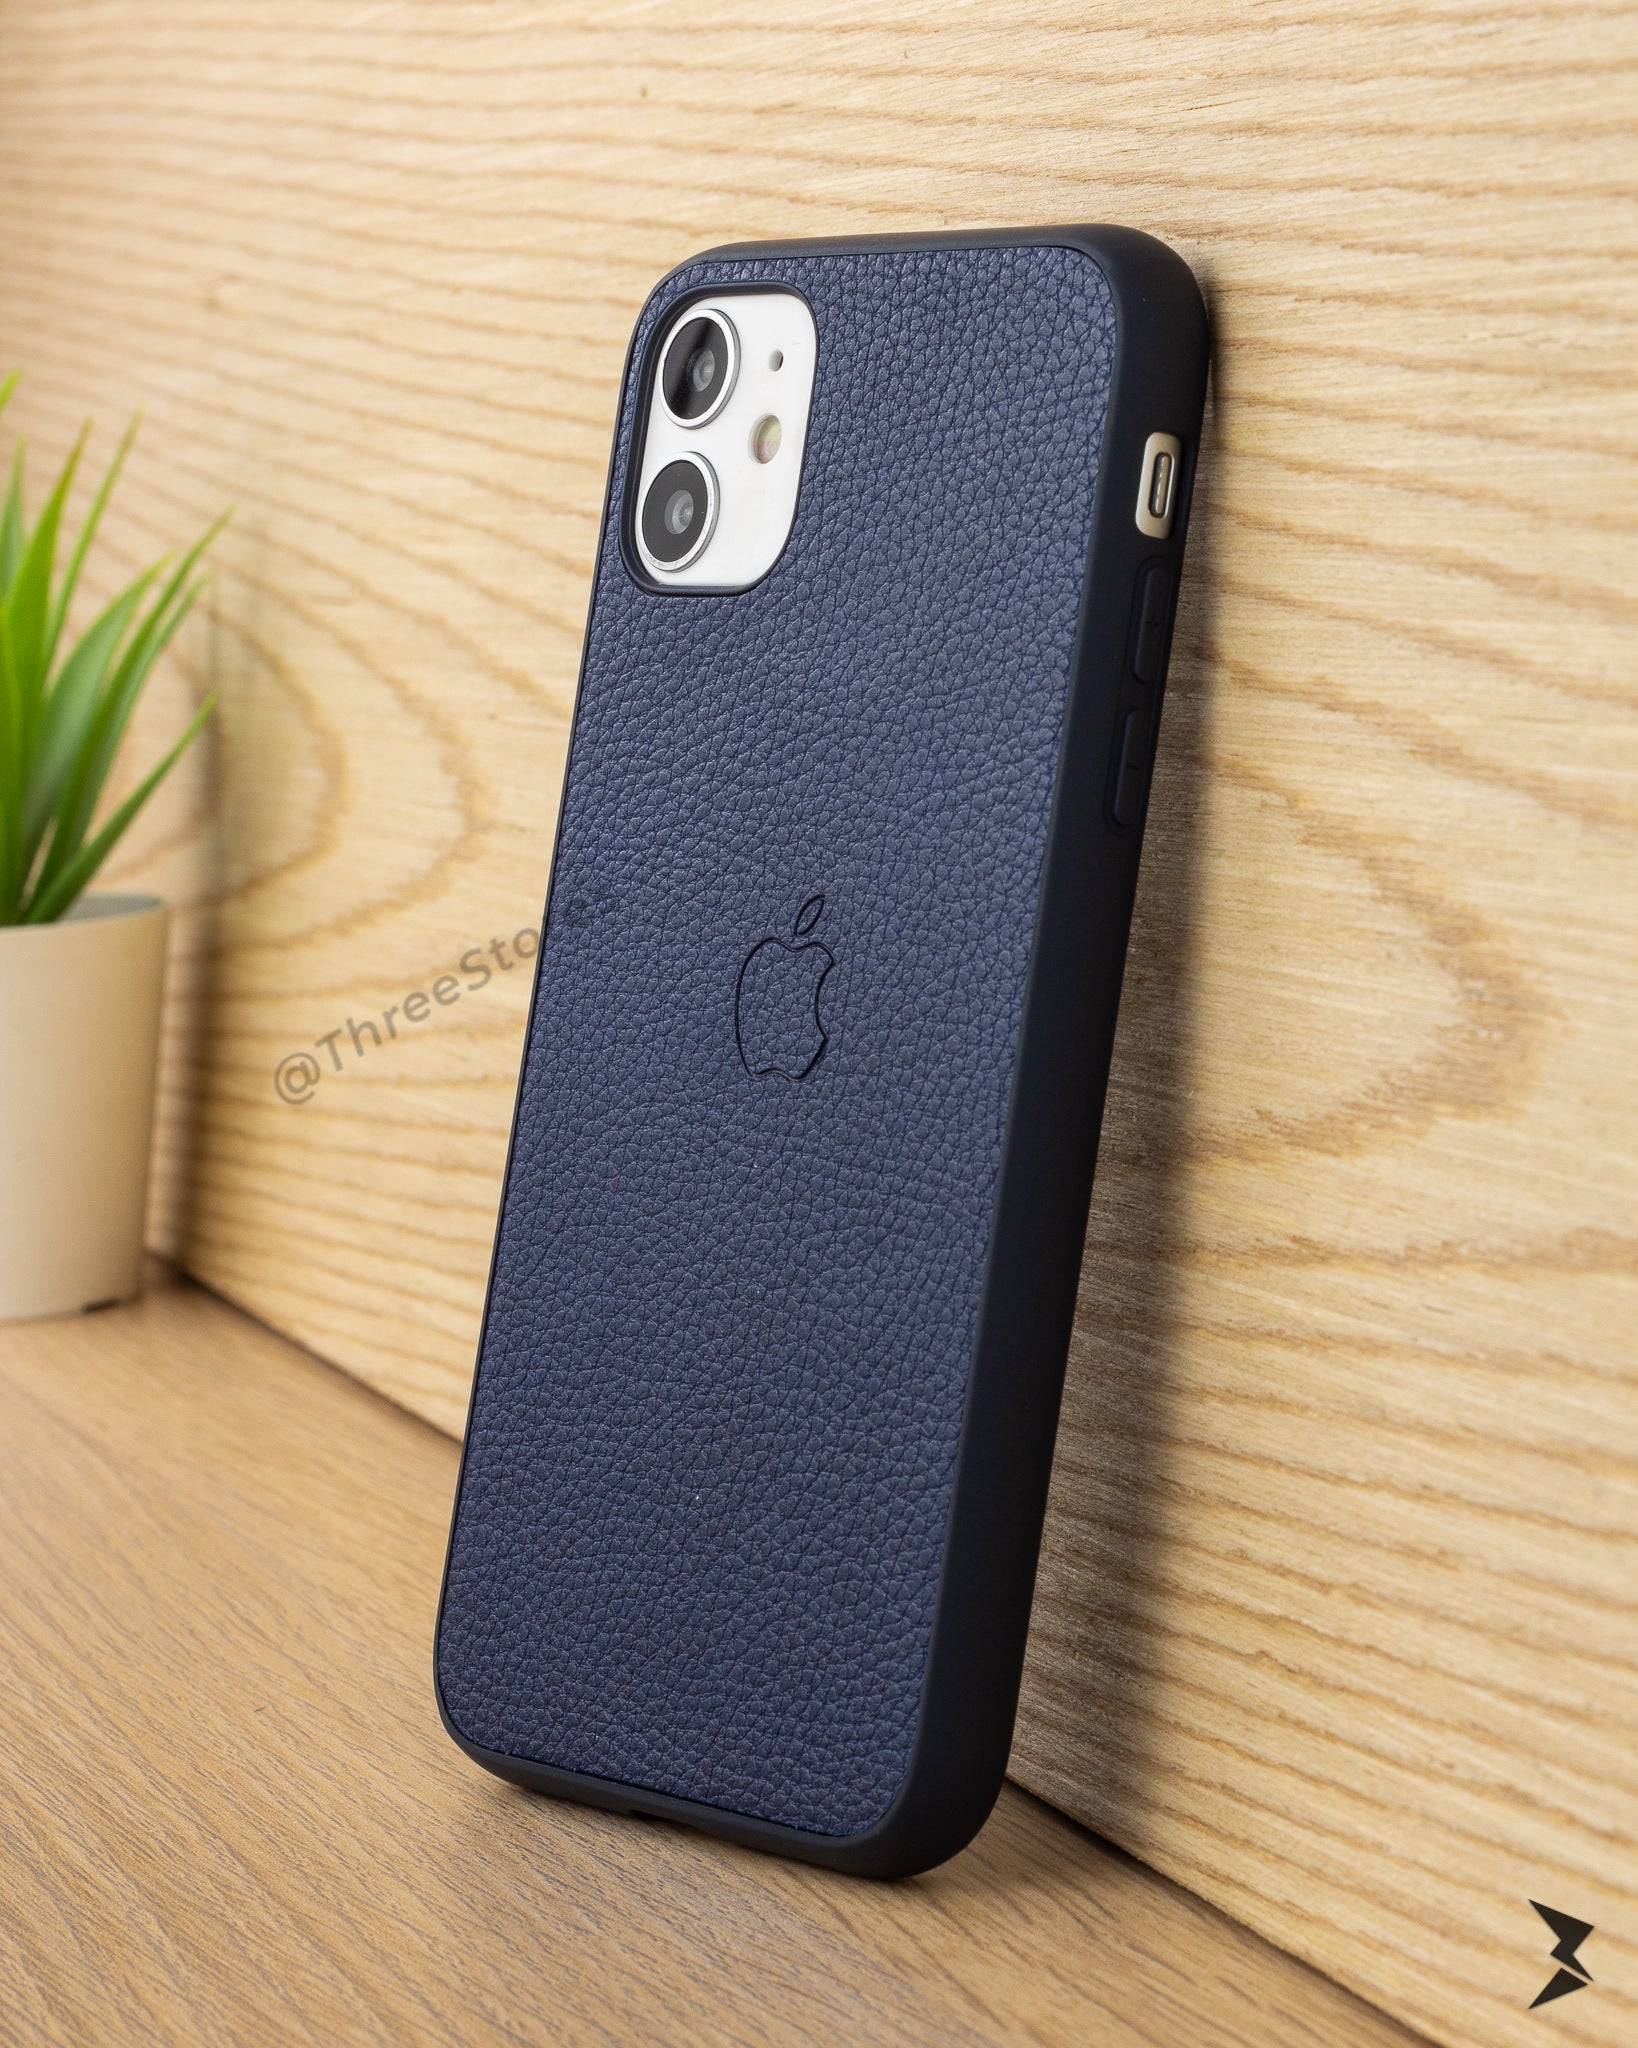 Slim Leather Case iPhone 11